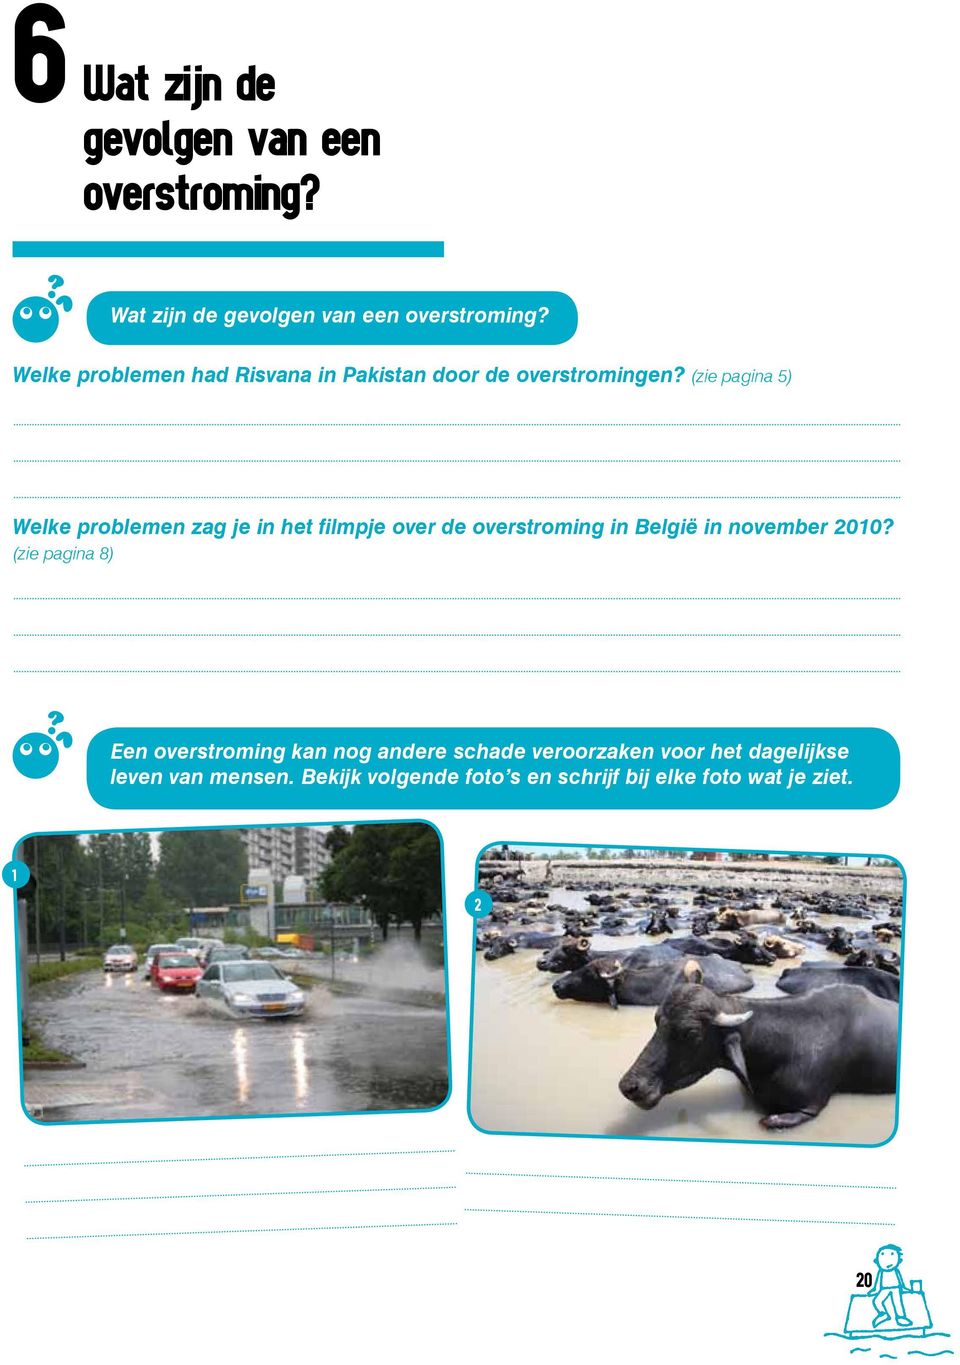 (zie pagina 5) Welke problemen zag je in het filmpje over de overstroming in België in november 2010?